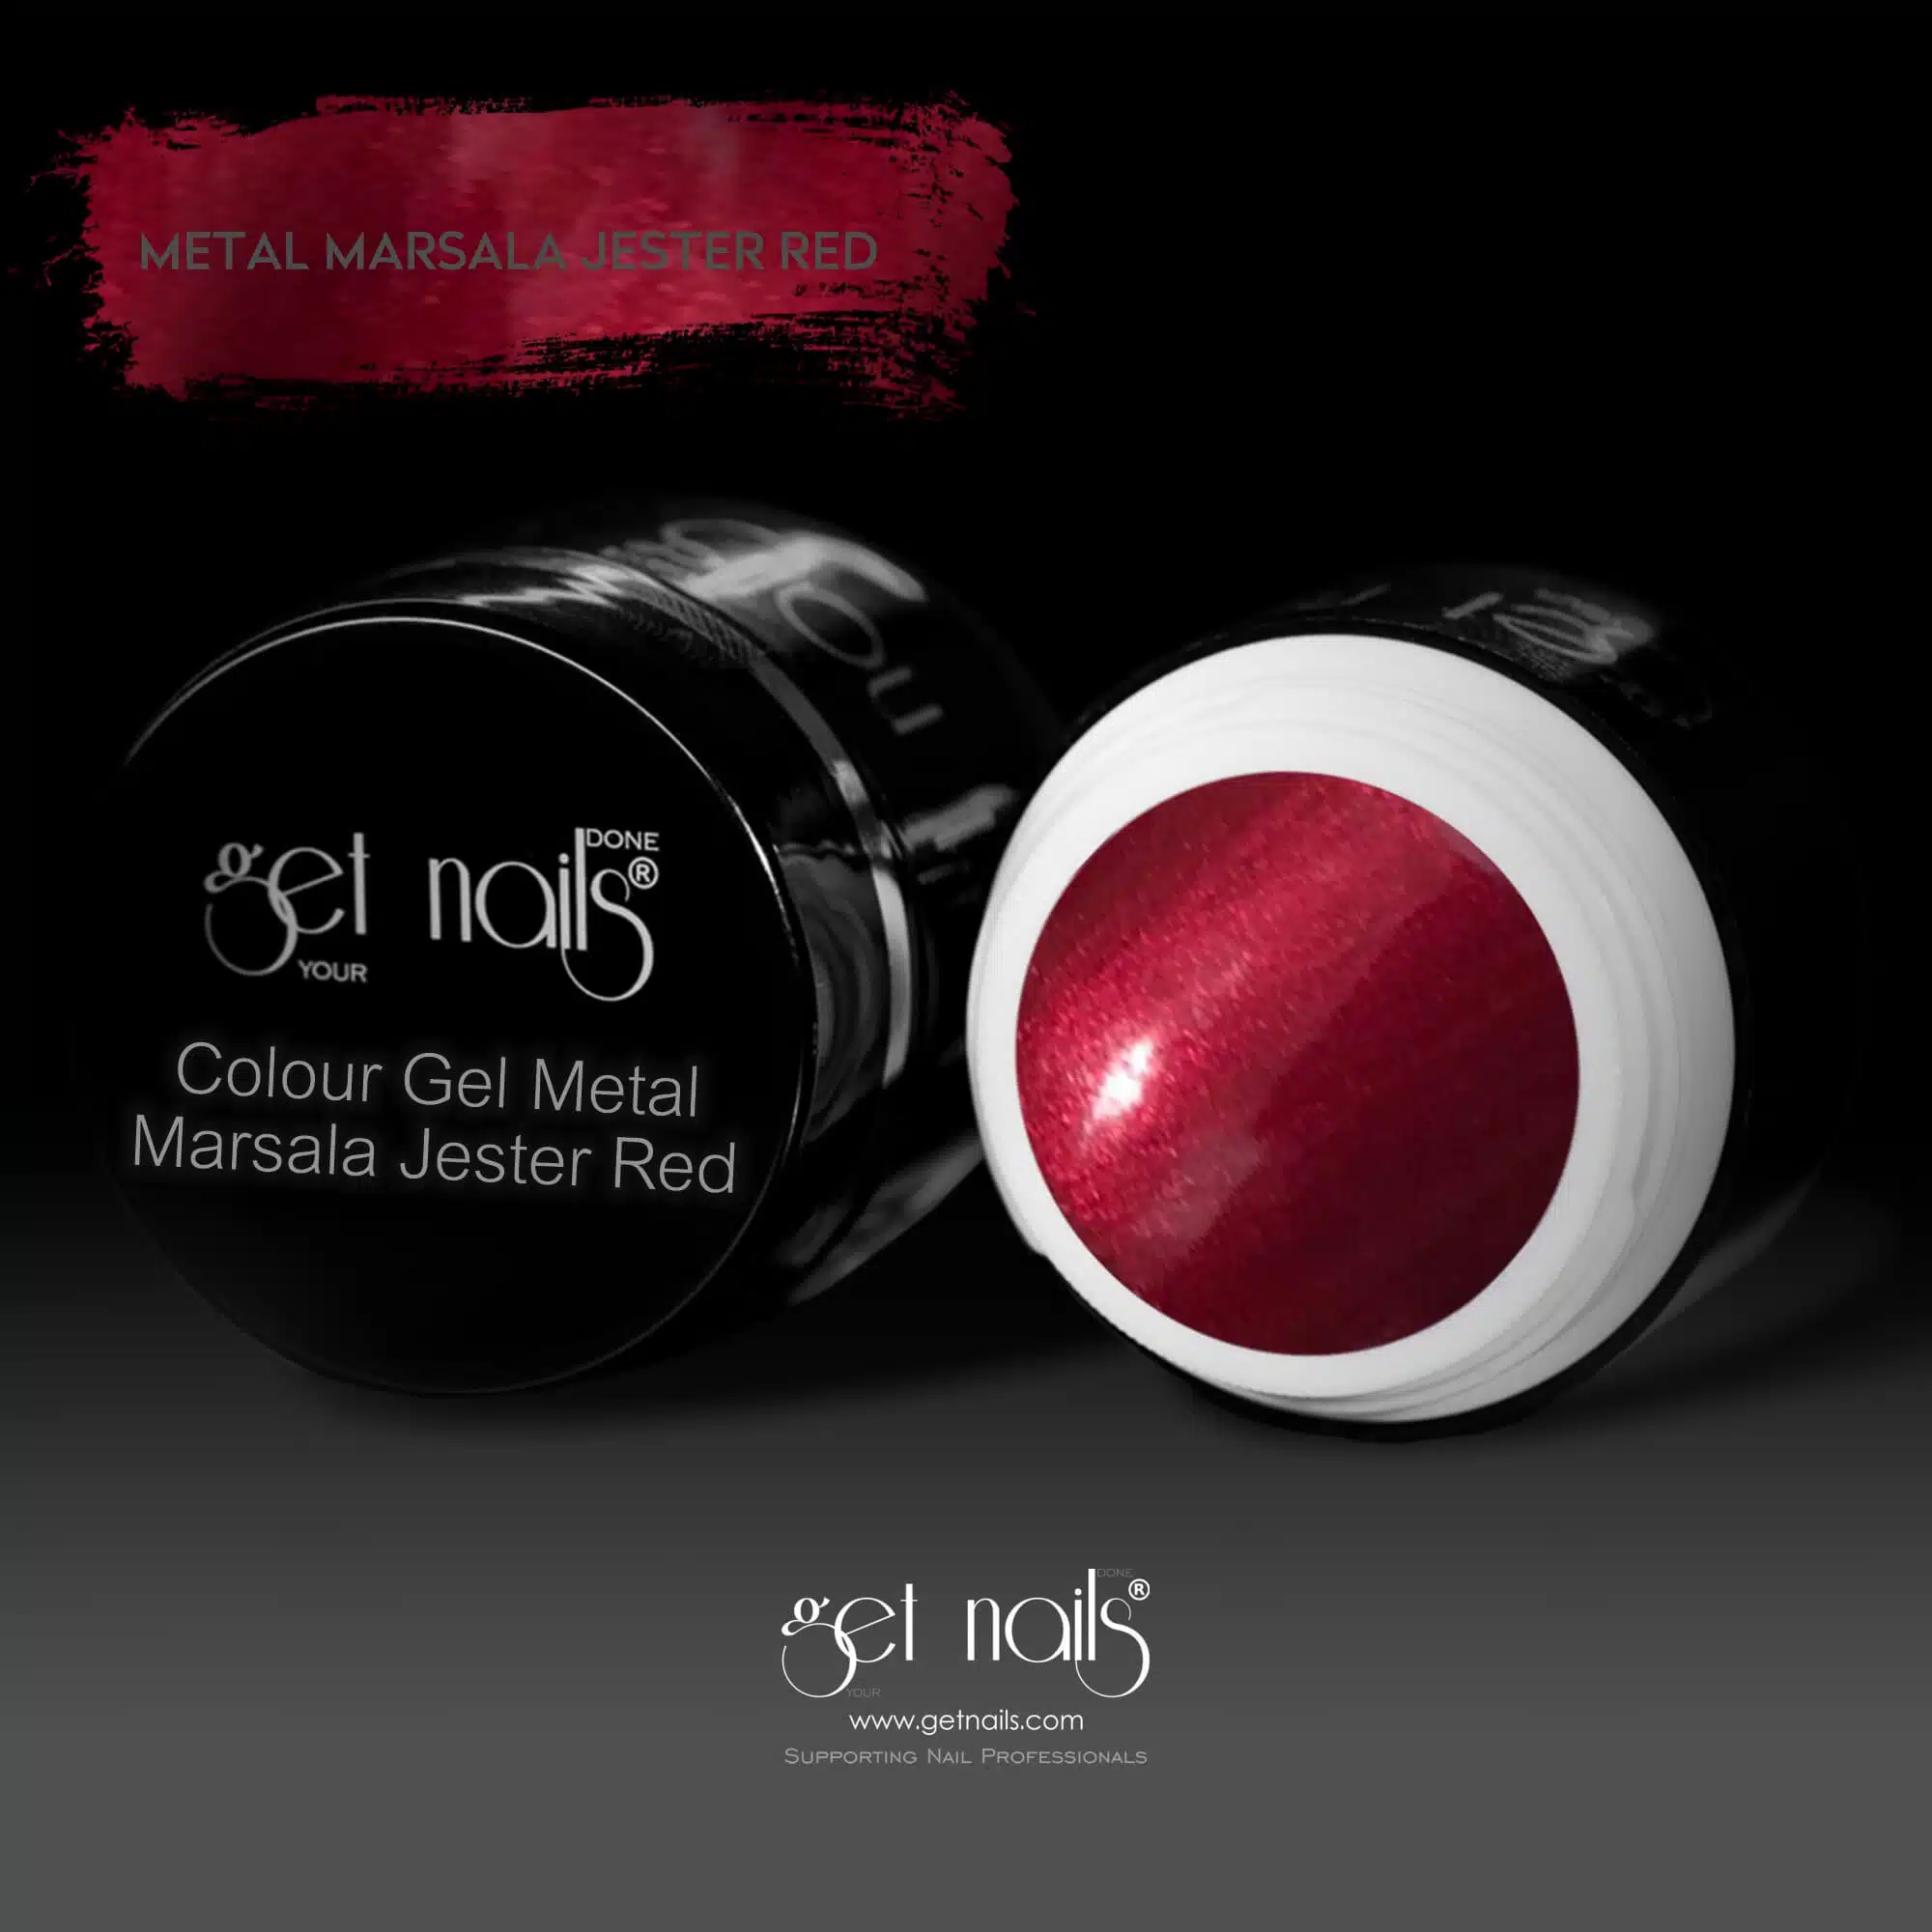 Get Nails Austria - Цветной гель металлик Marsala Jester Red 5g